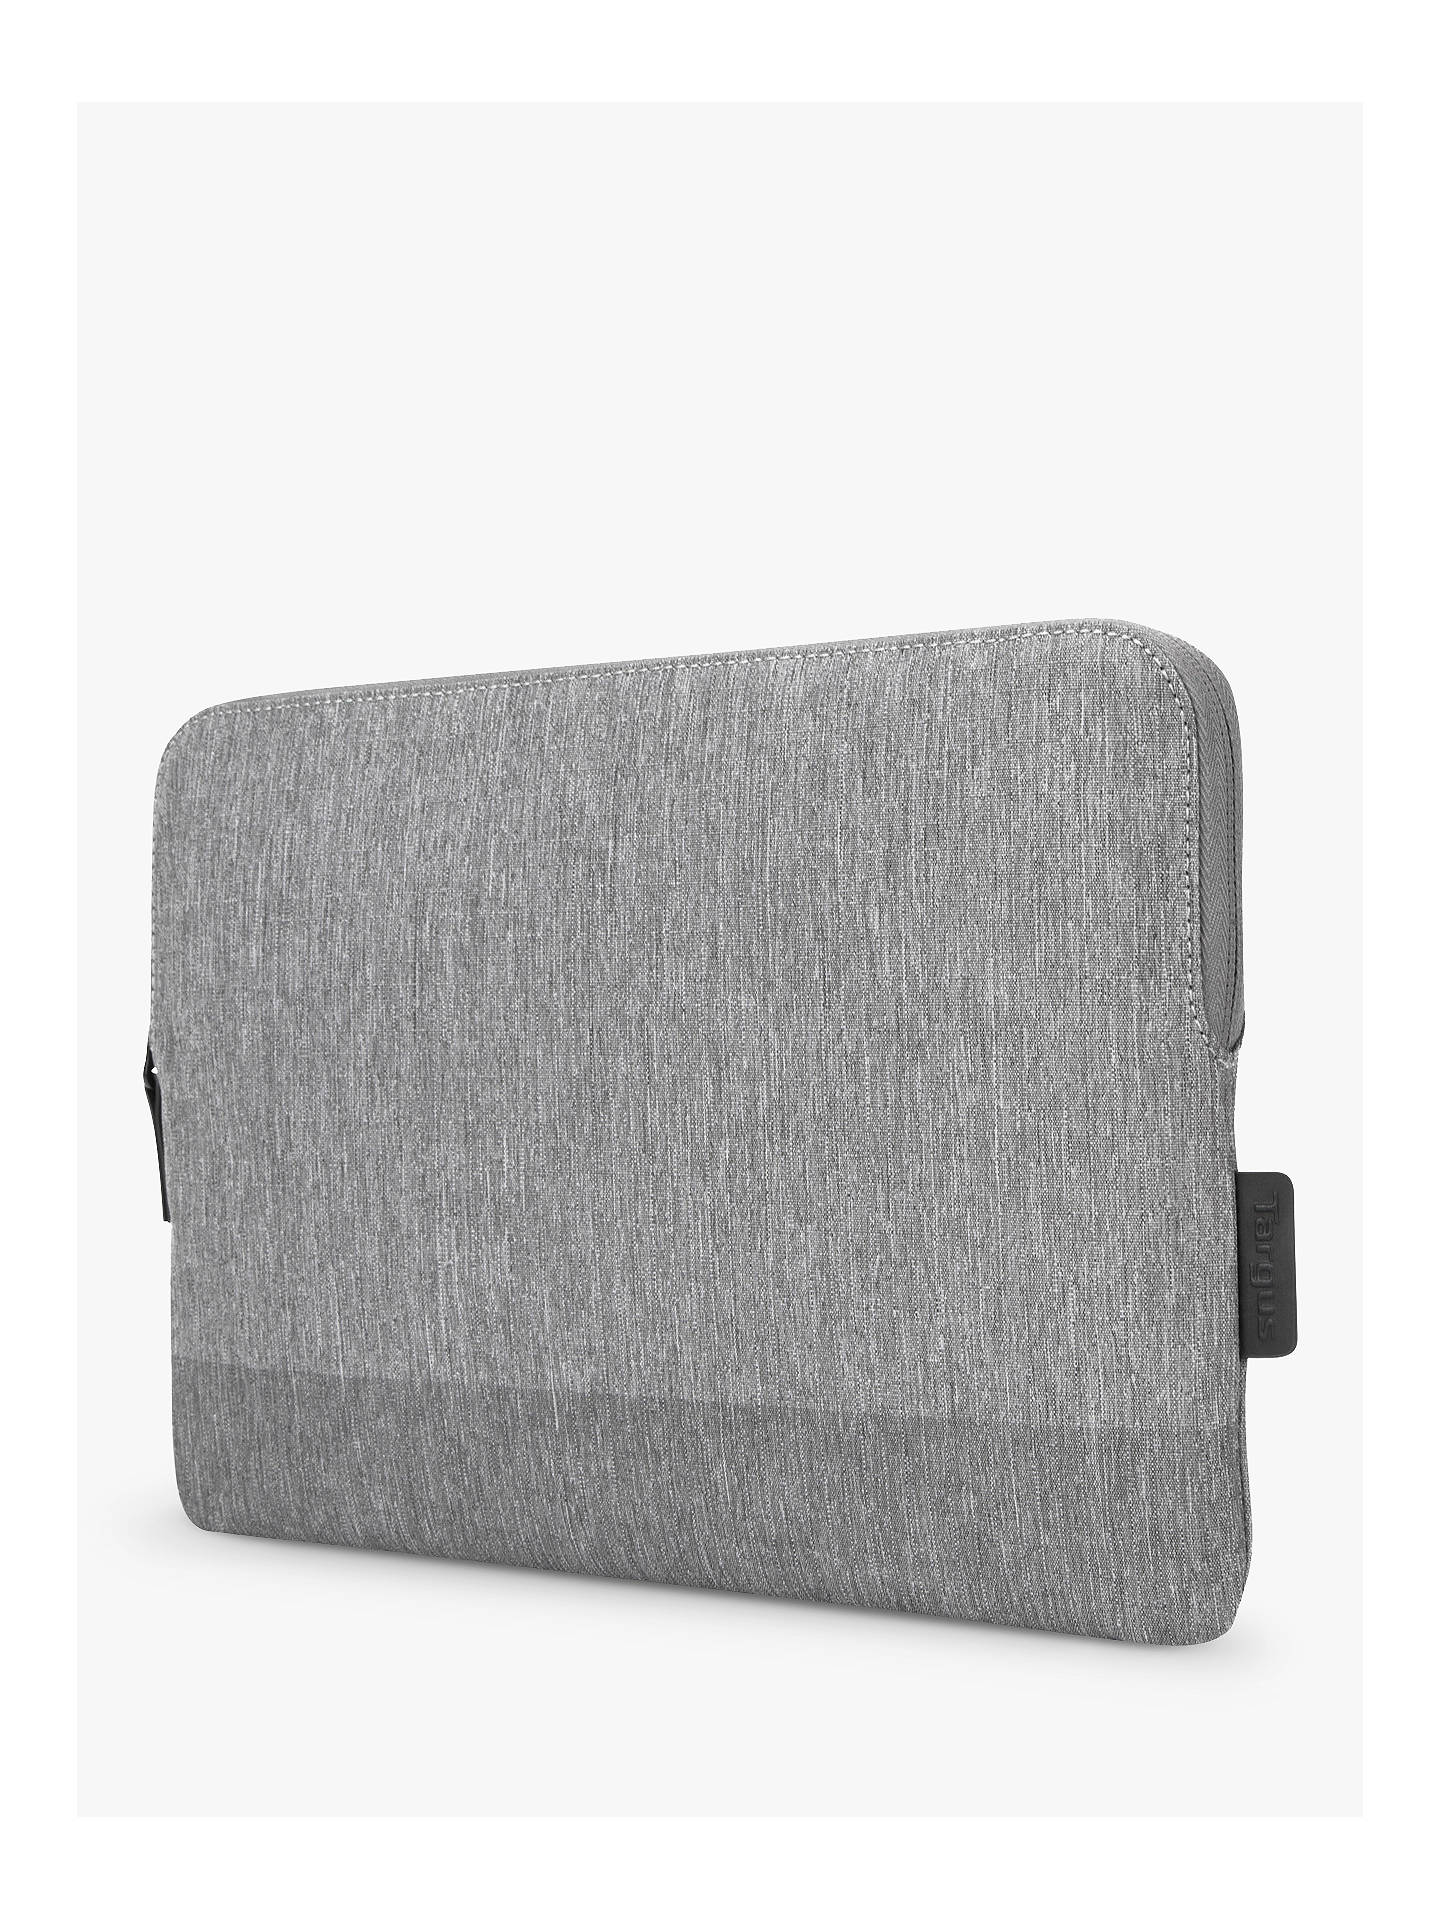 Buy Targus CityLite Laptop Sleeve for 15” MacBook, Grey Online at johnlewis.com